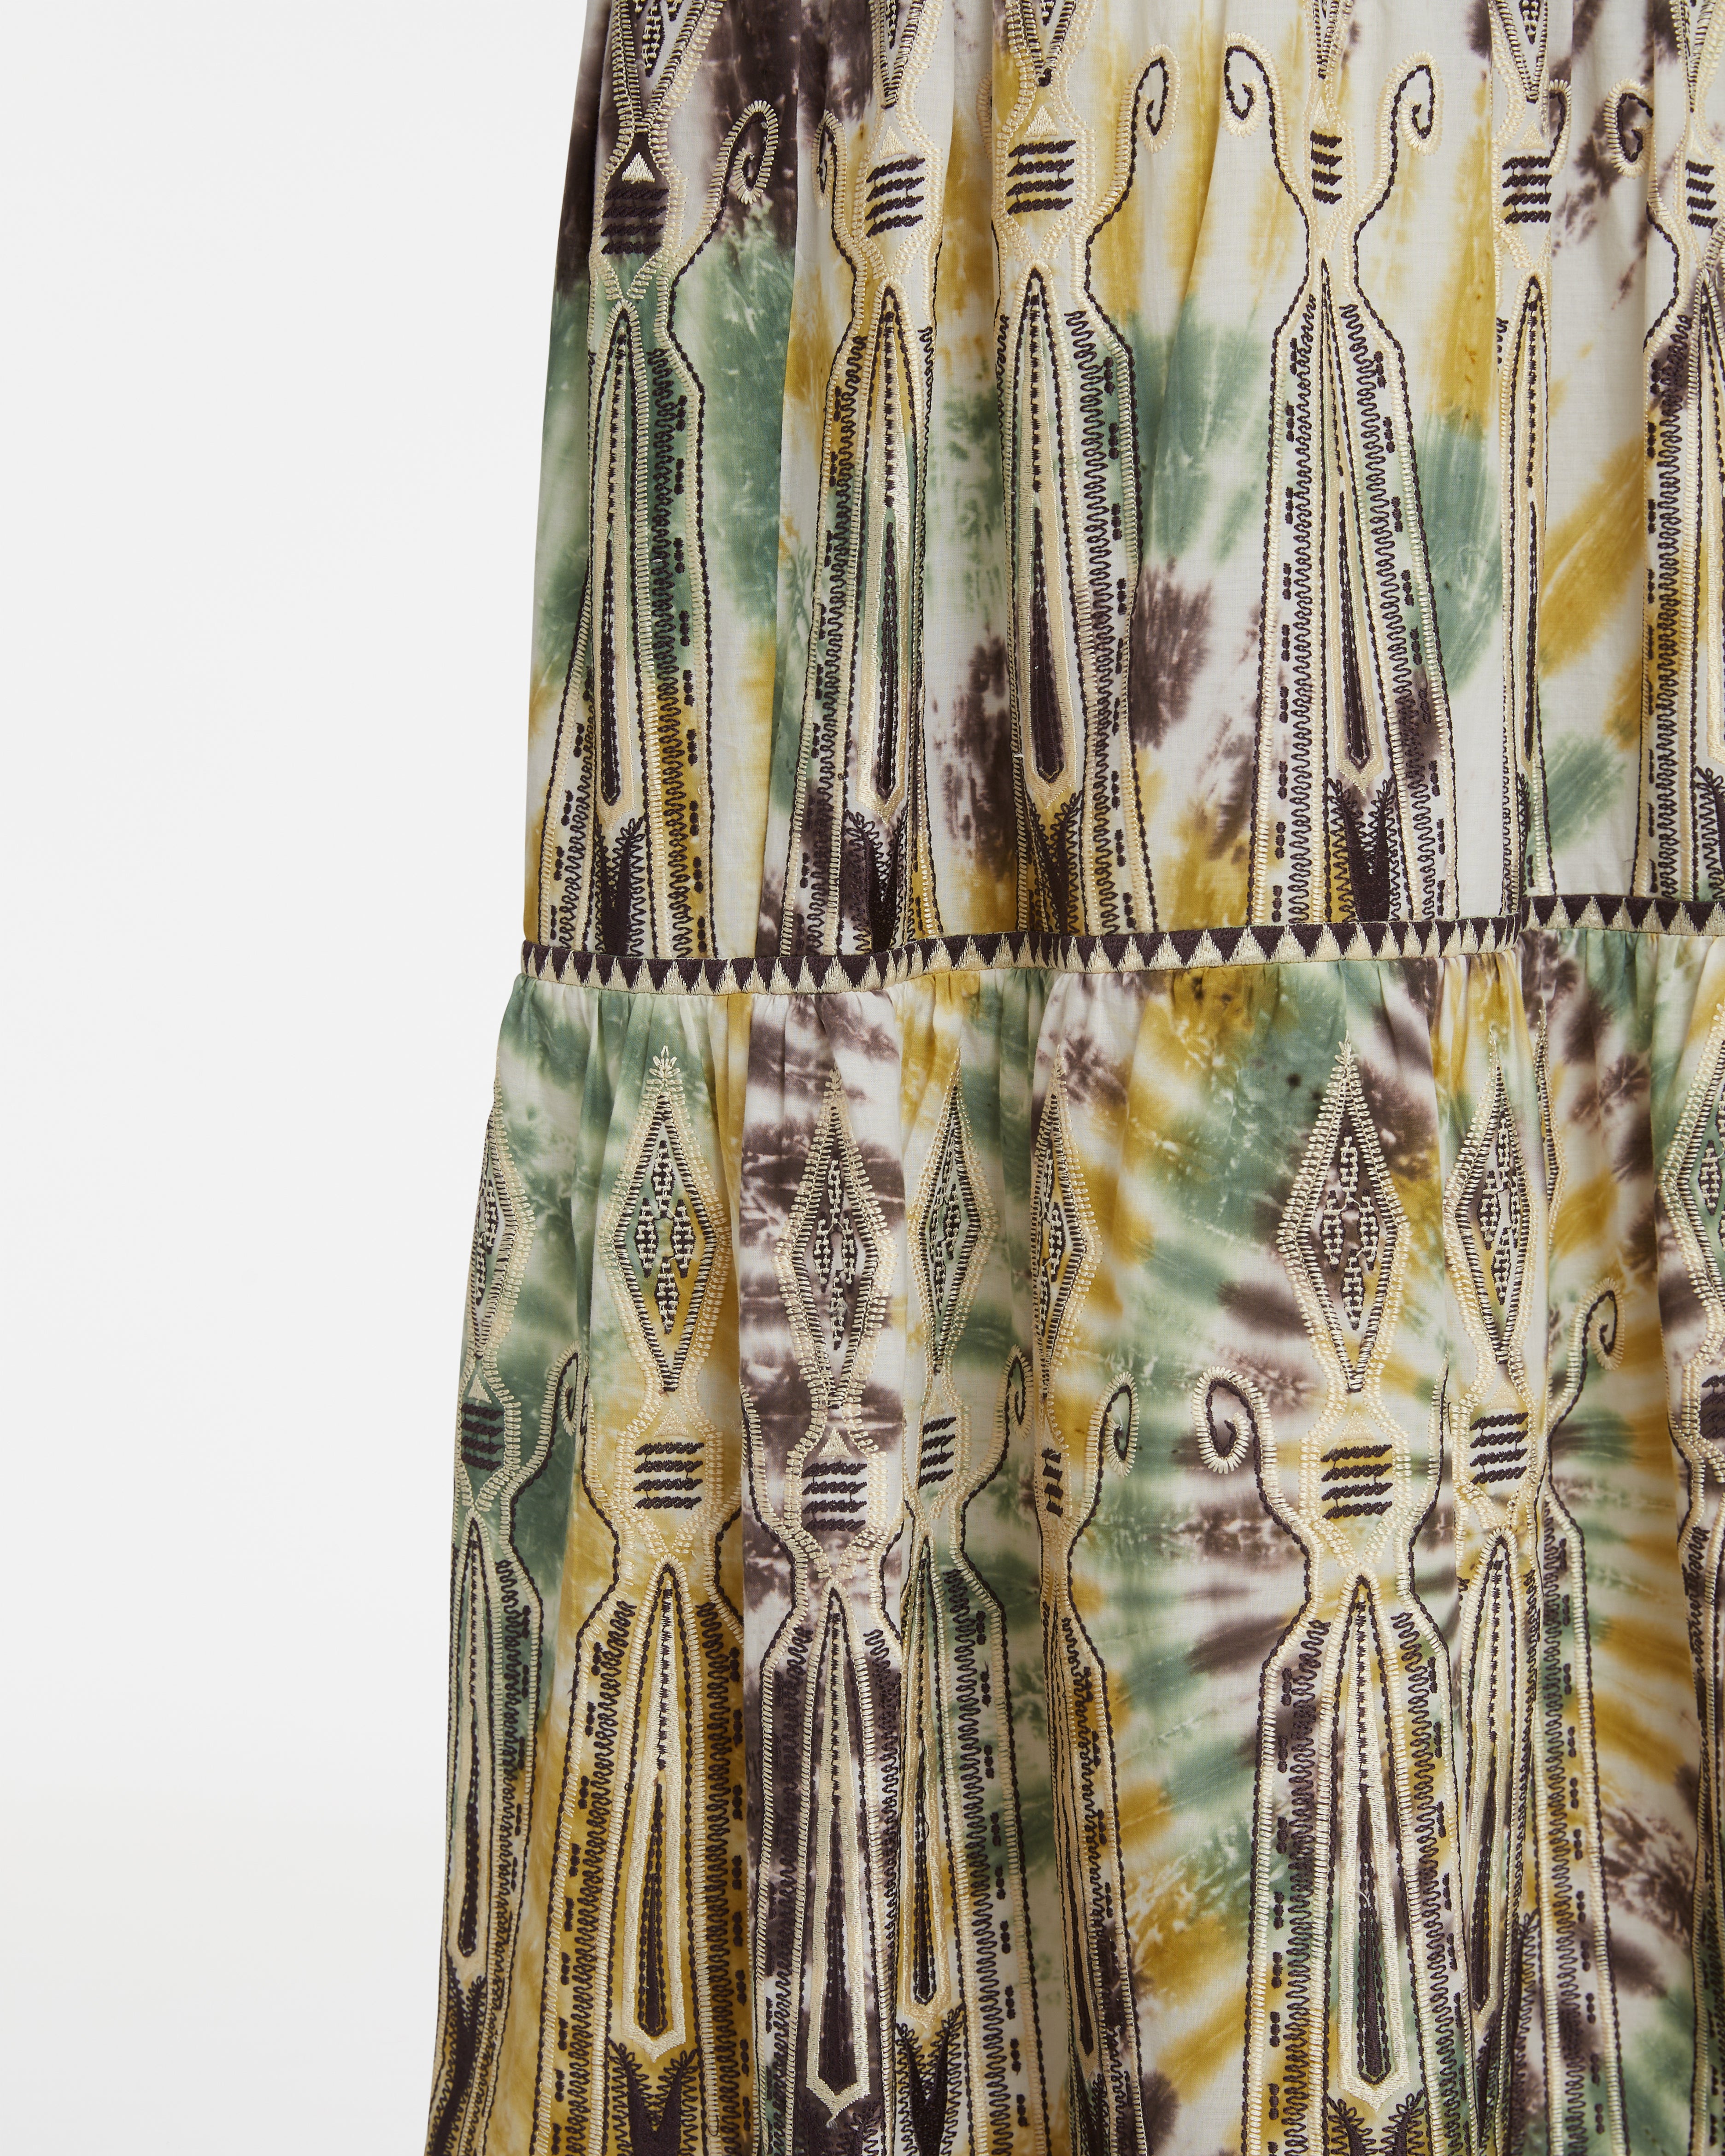 Elda Skirt With Tie Dye Embroidery